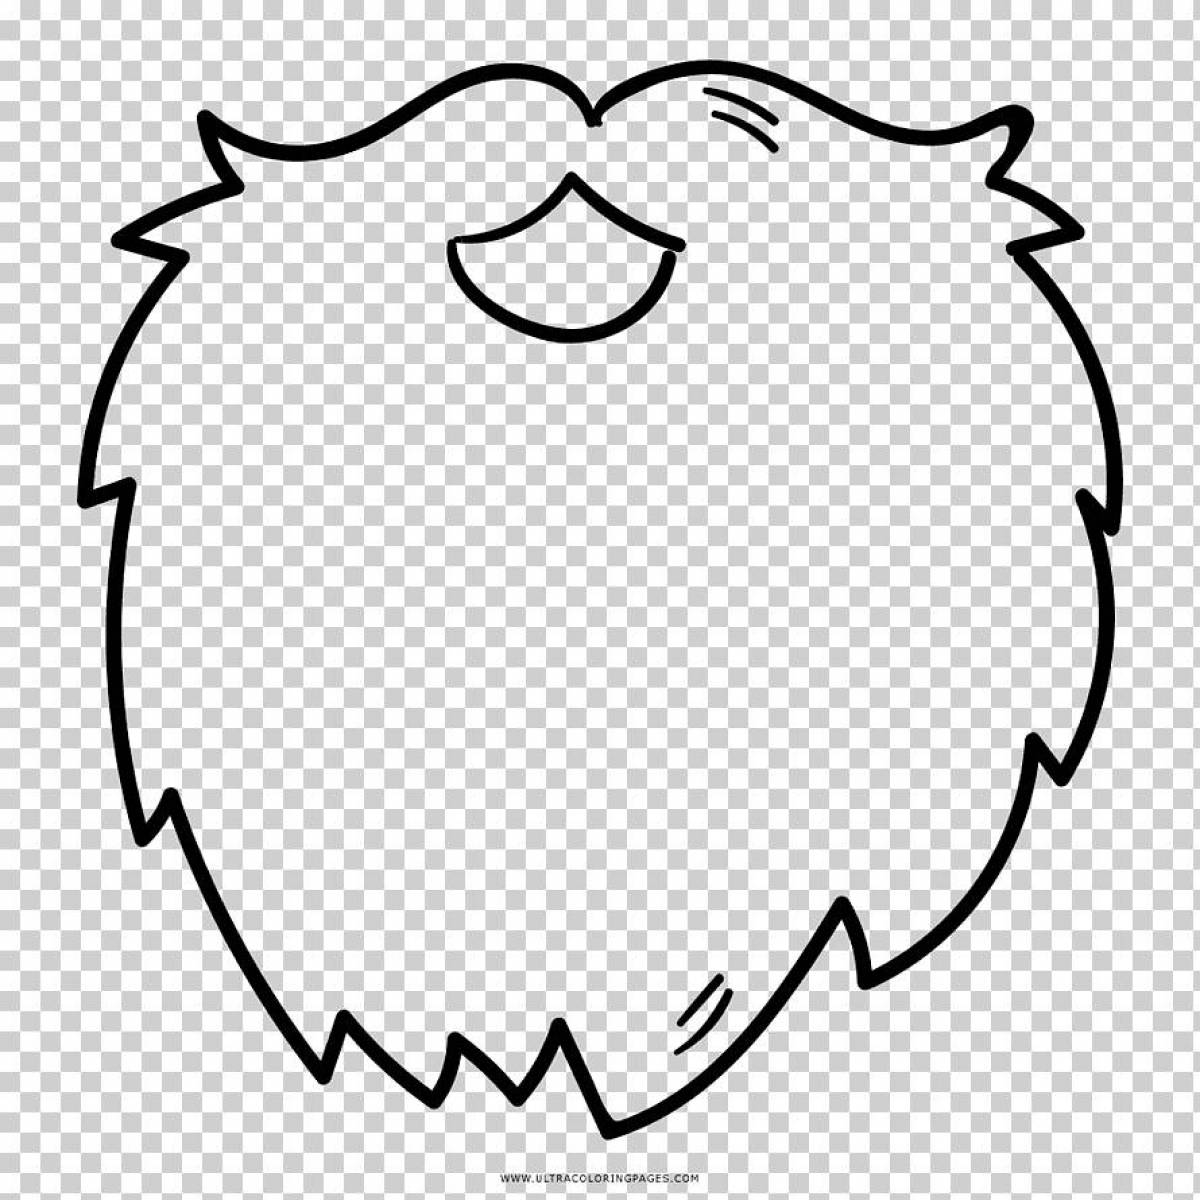 Boda's happy beard coloring page